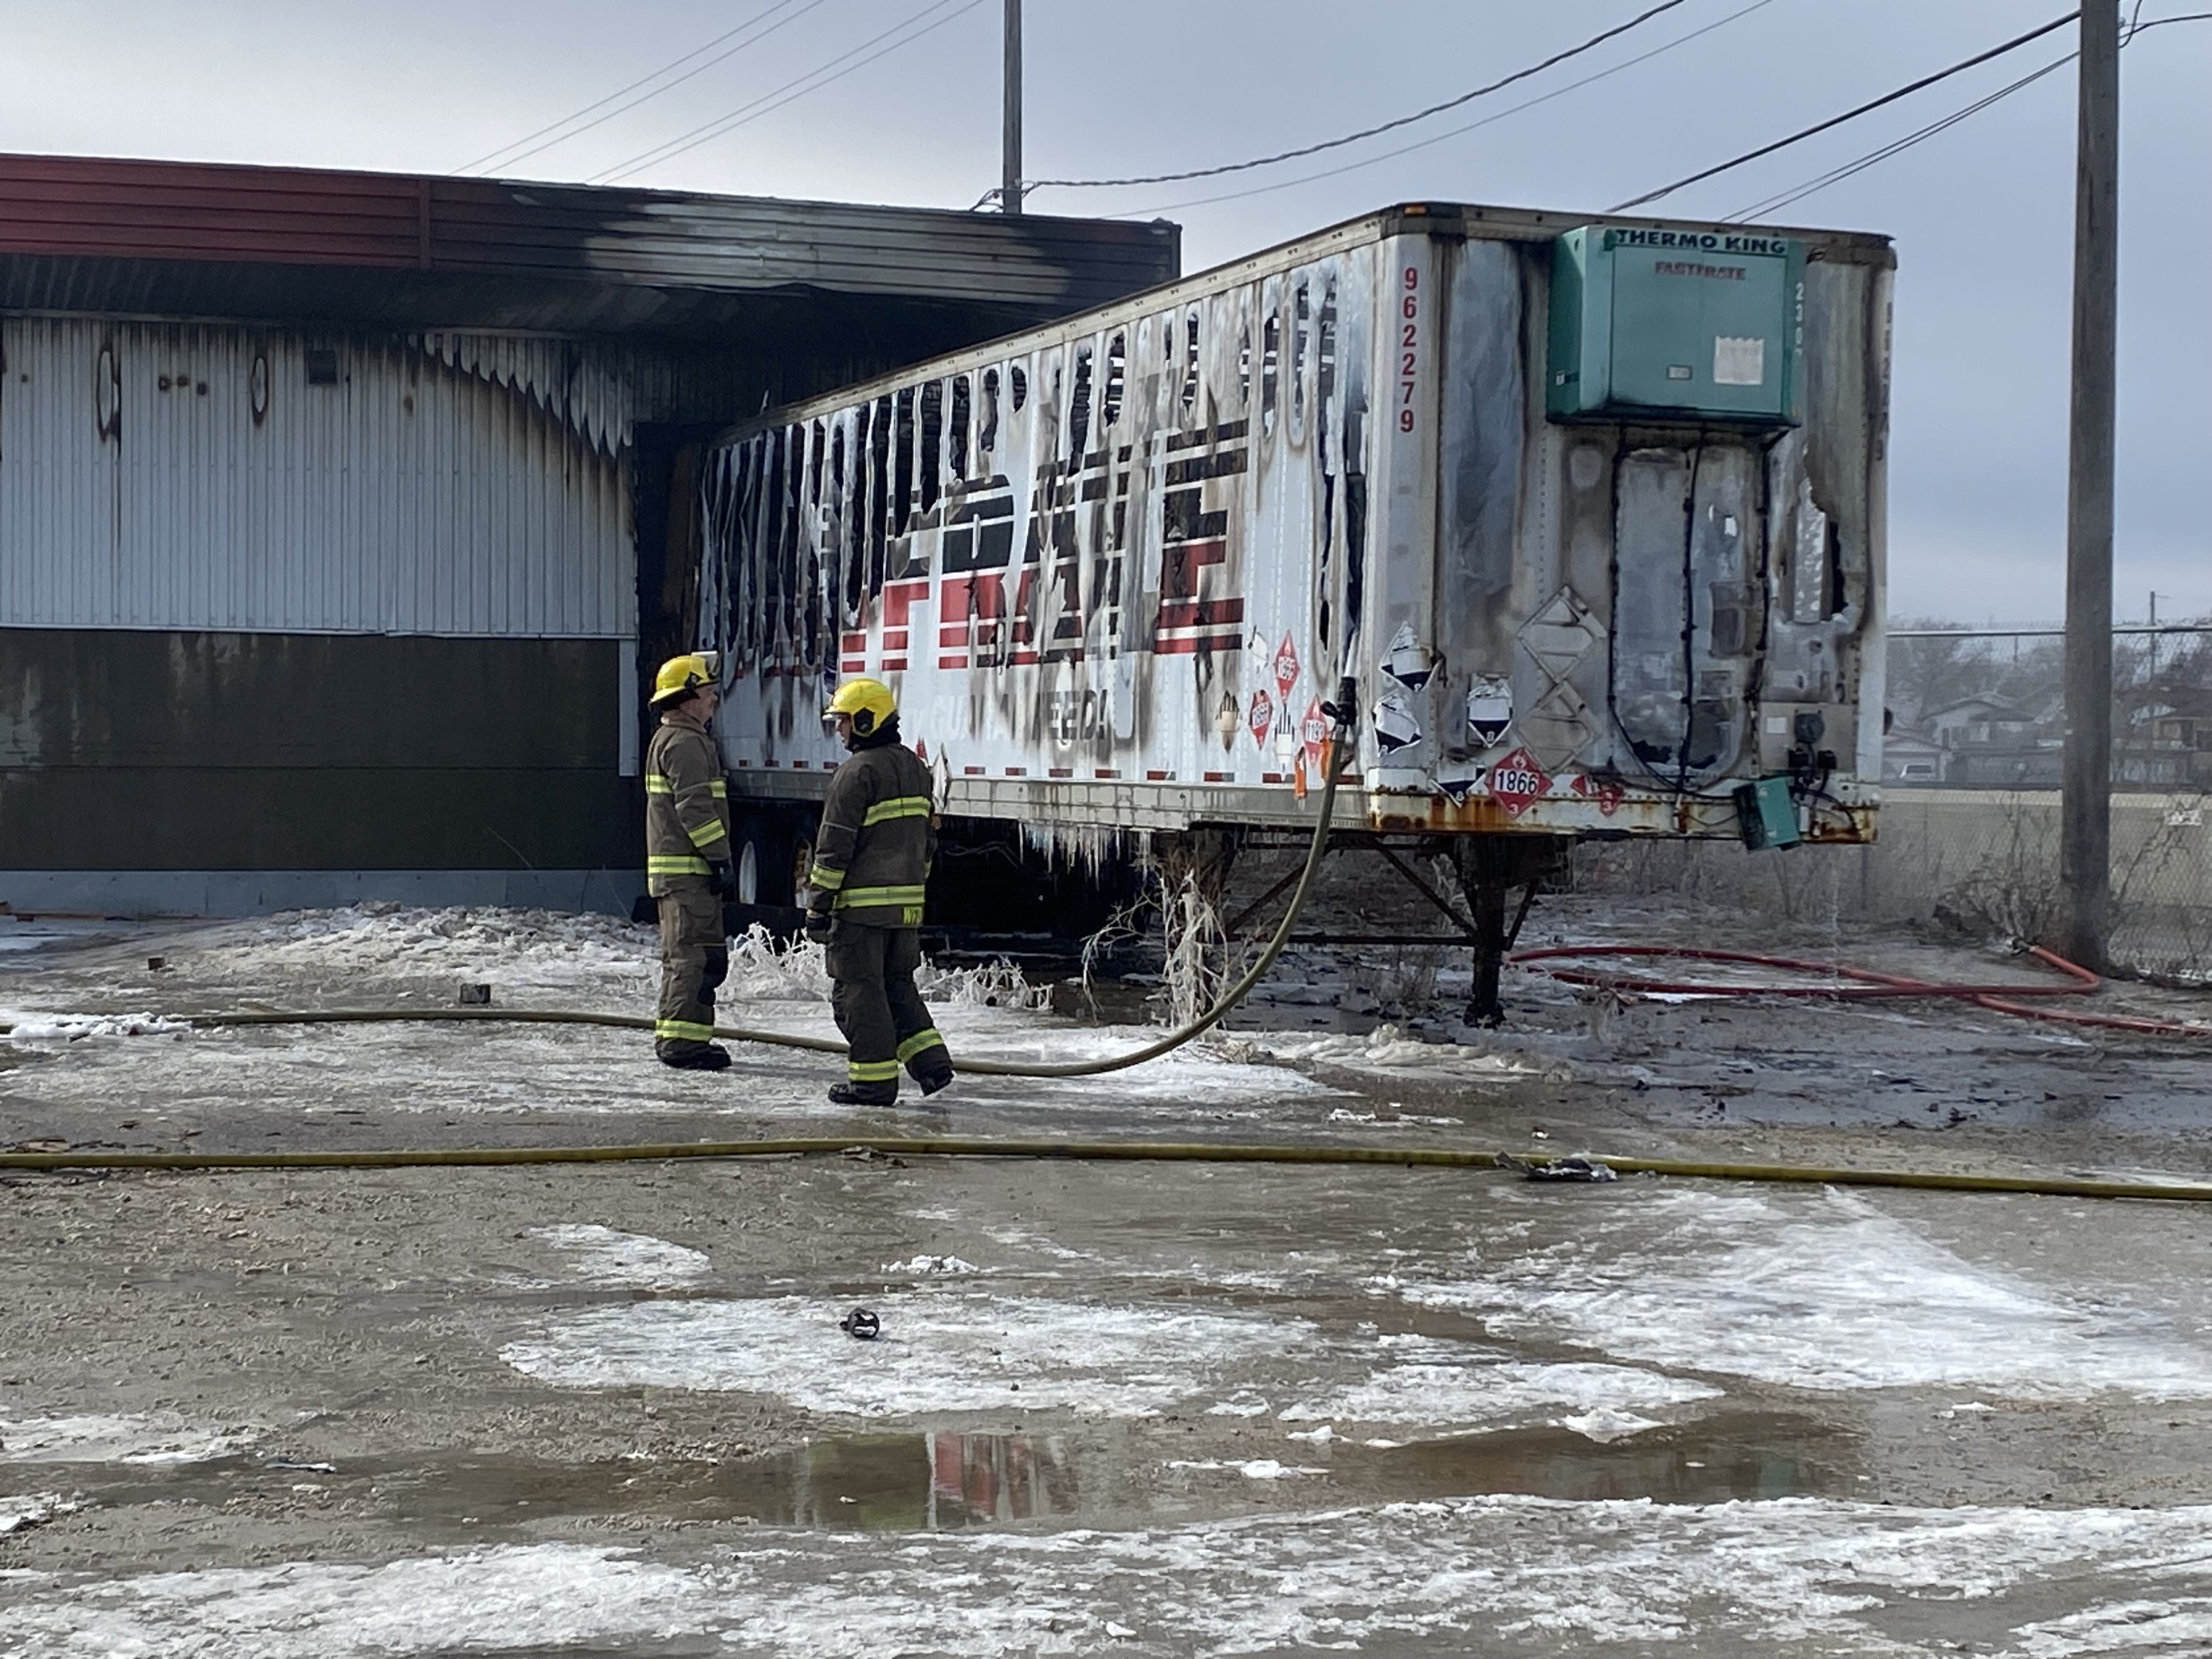 Winnipeg fire crews battle blaze at trucking company, most of building saved